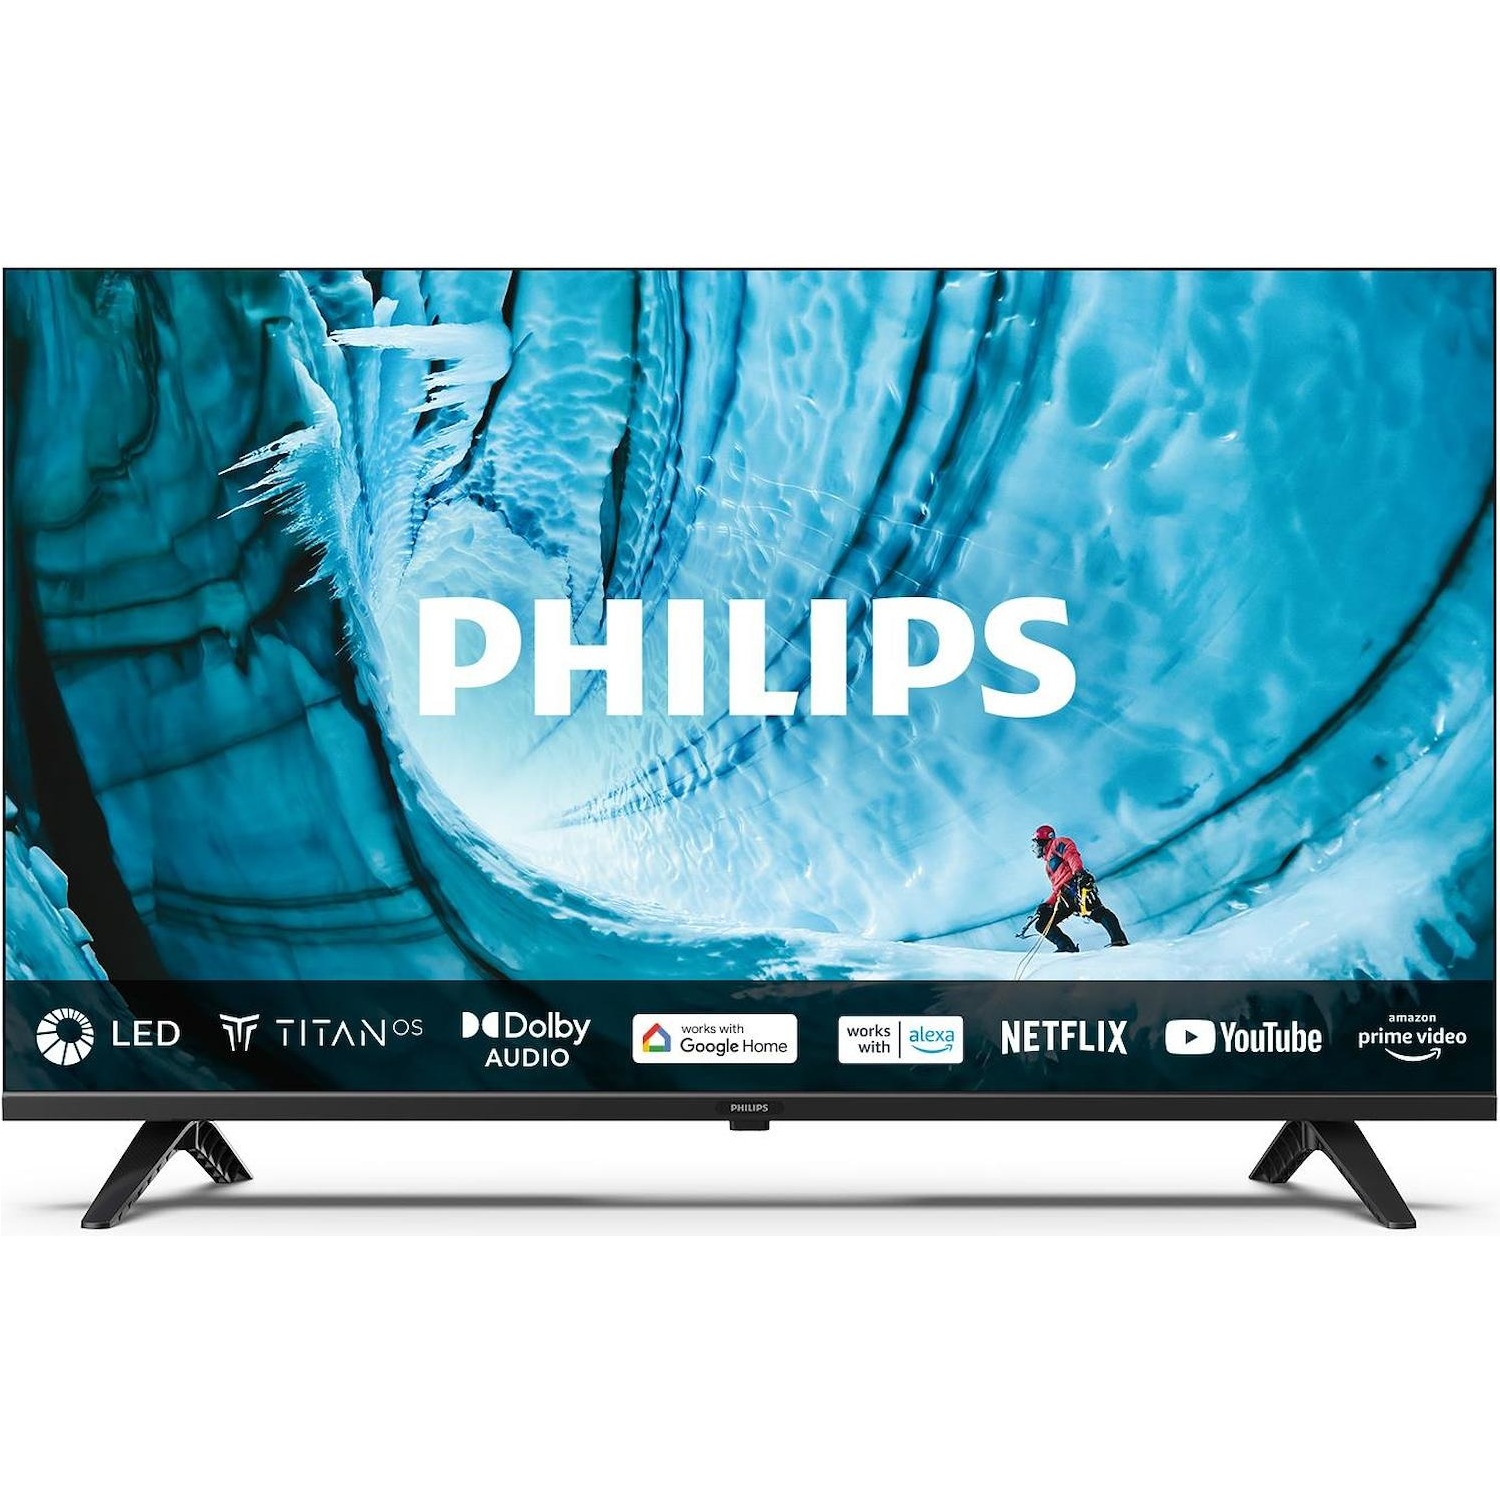 Immagine per TV LED Smart Philips 32PHS6009 FULL HD da DIMOStore